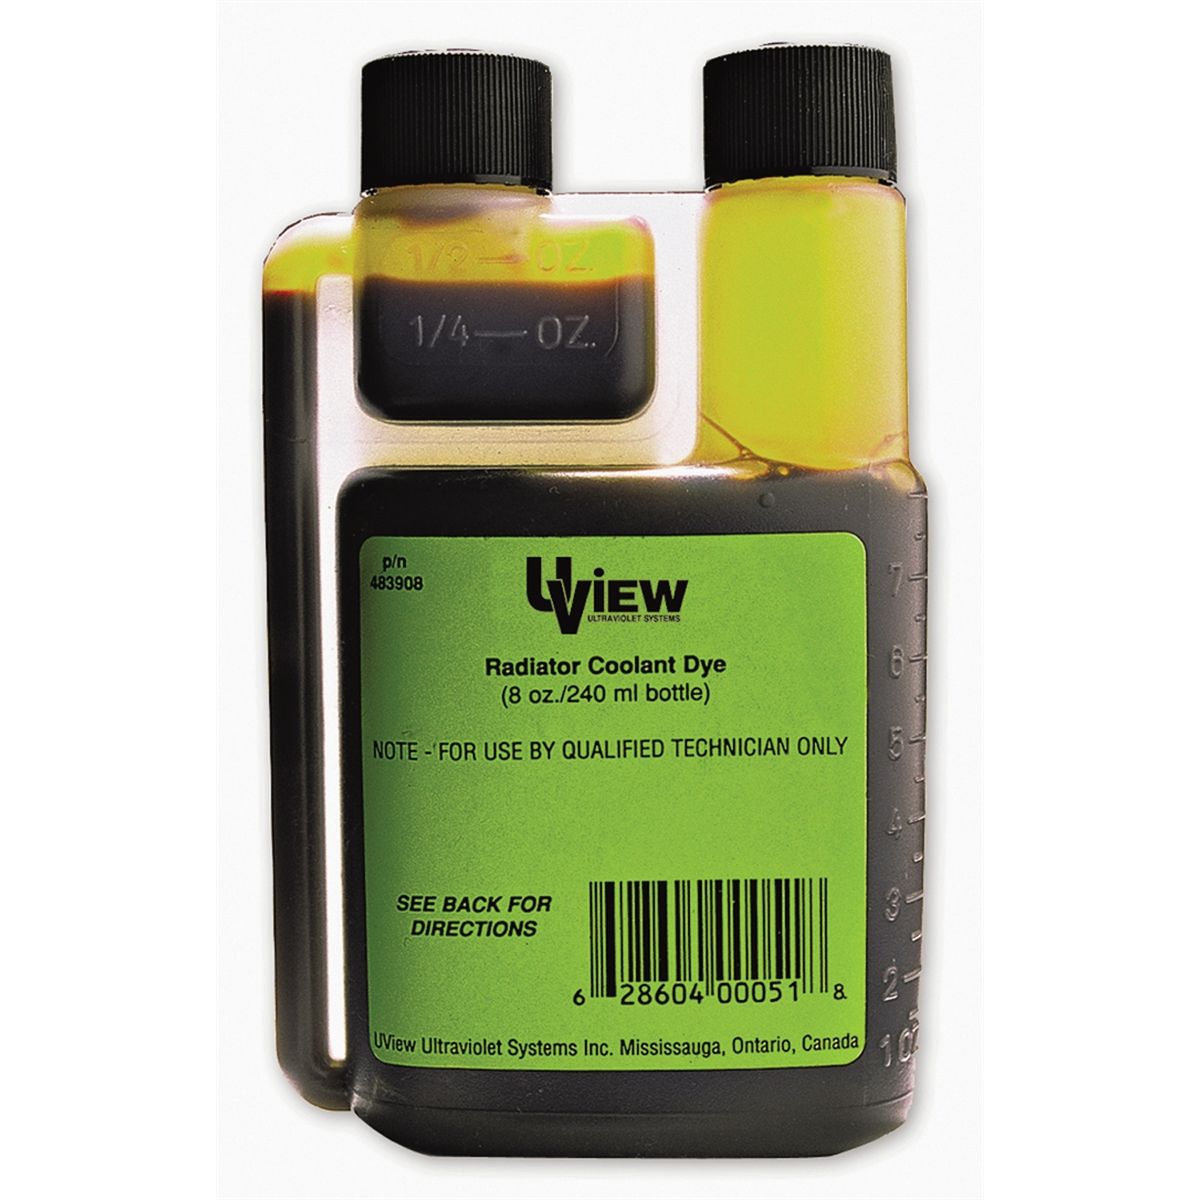 Radiator Coolant Dye - 8 oz. Bottle